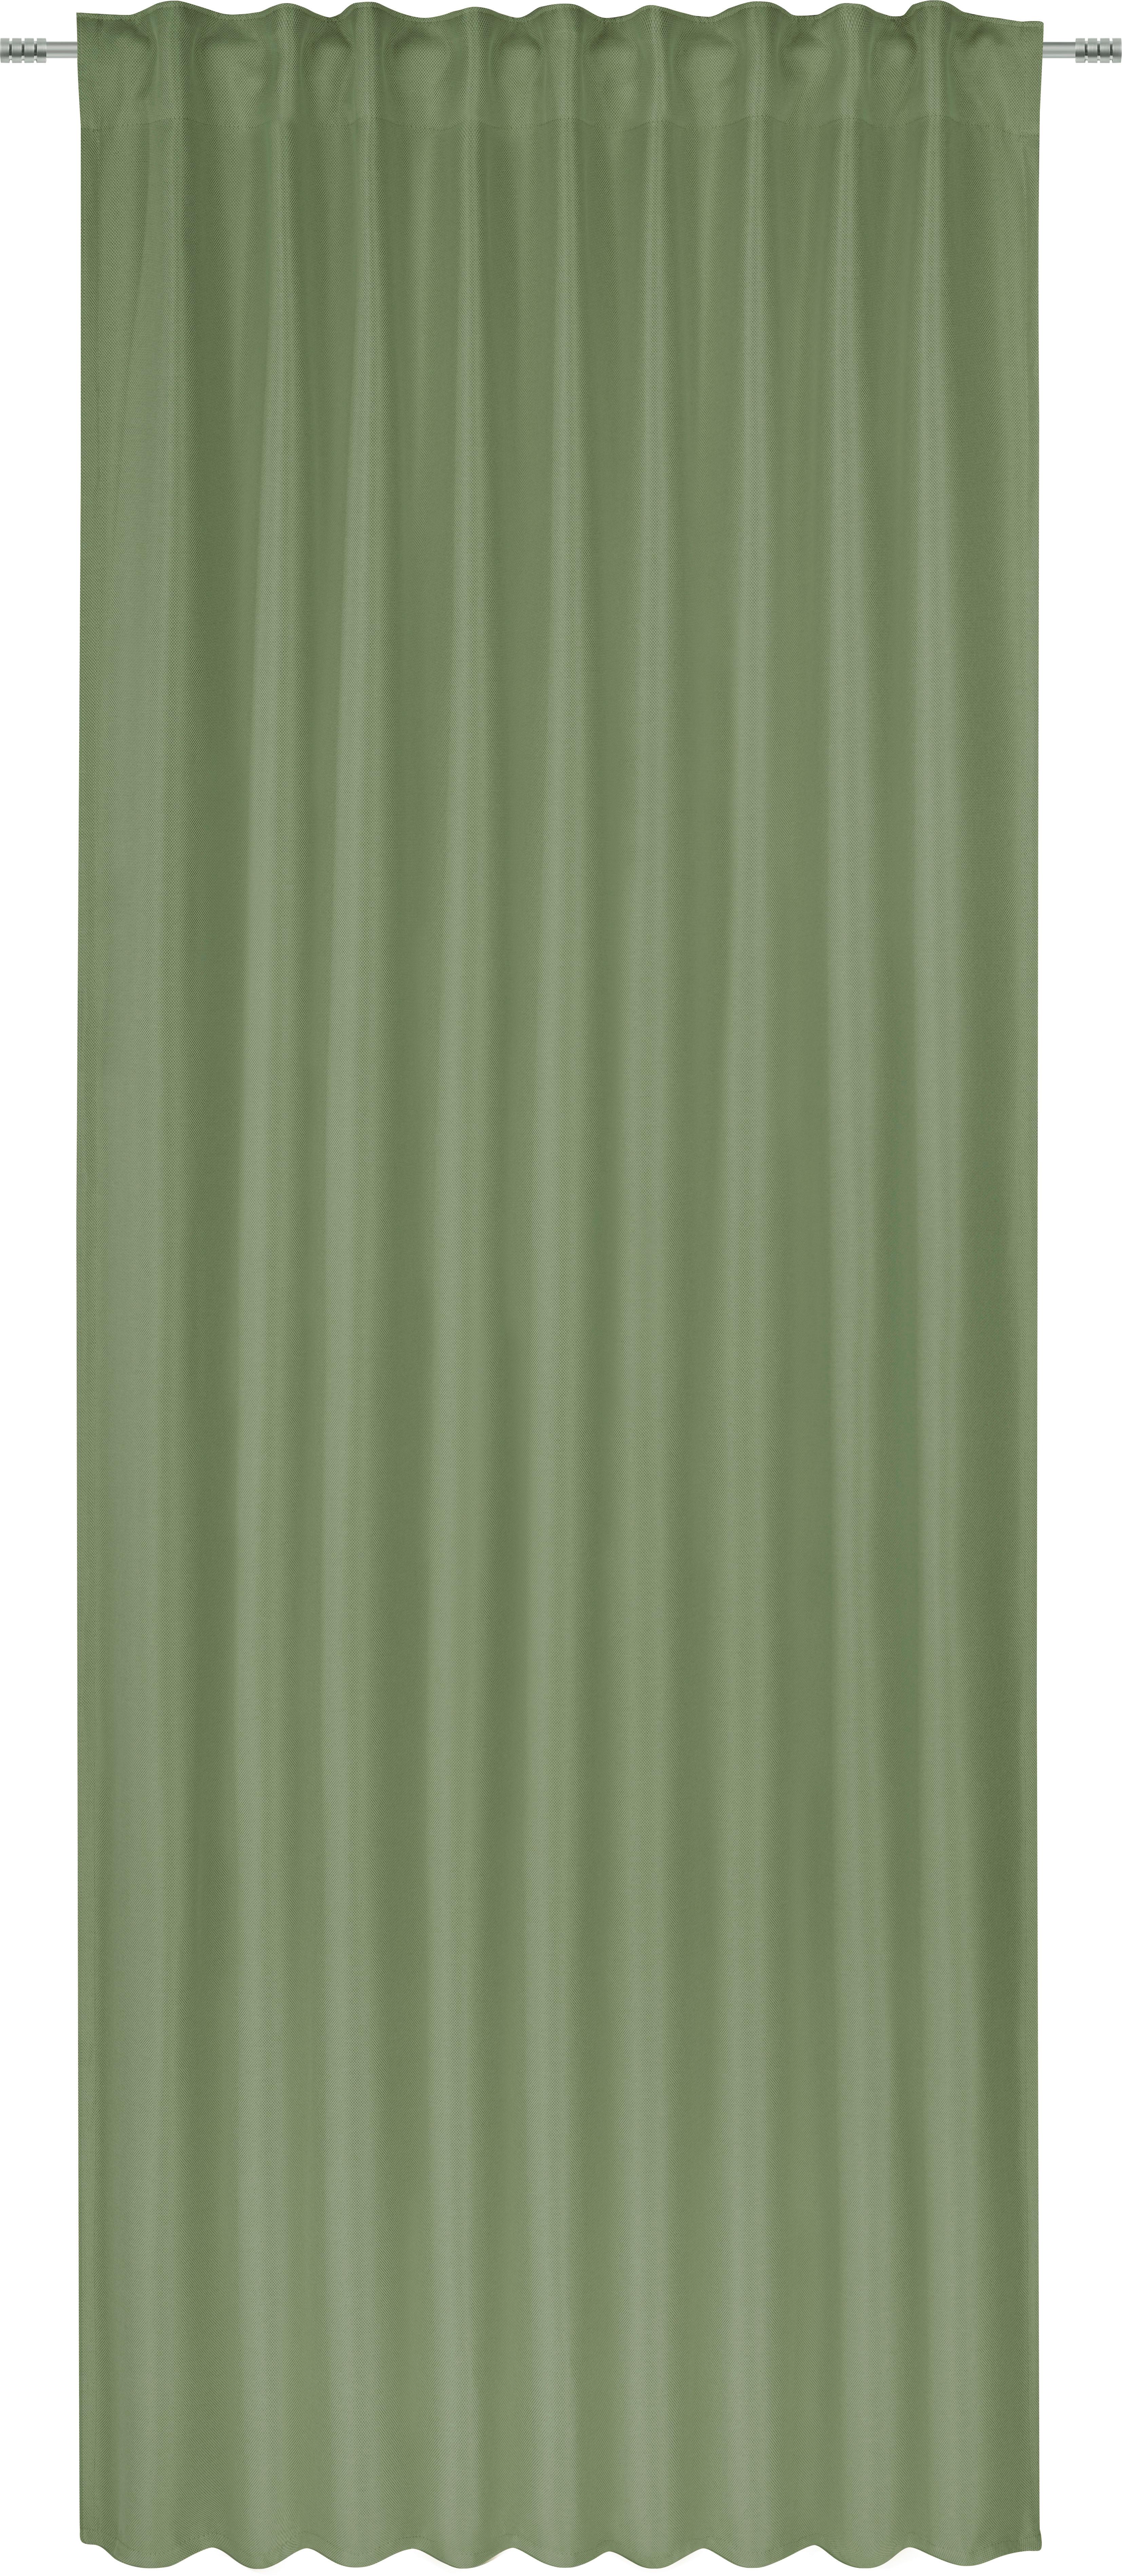 Verdunkelungsvorhang Riccarda in Grün ca. 135x255cm - Grün, MODERN, Textil (135/255cm) - Premium Living